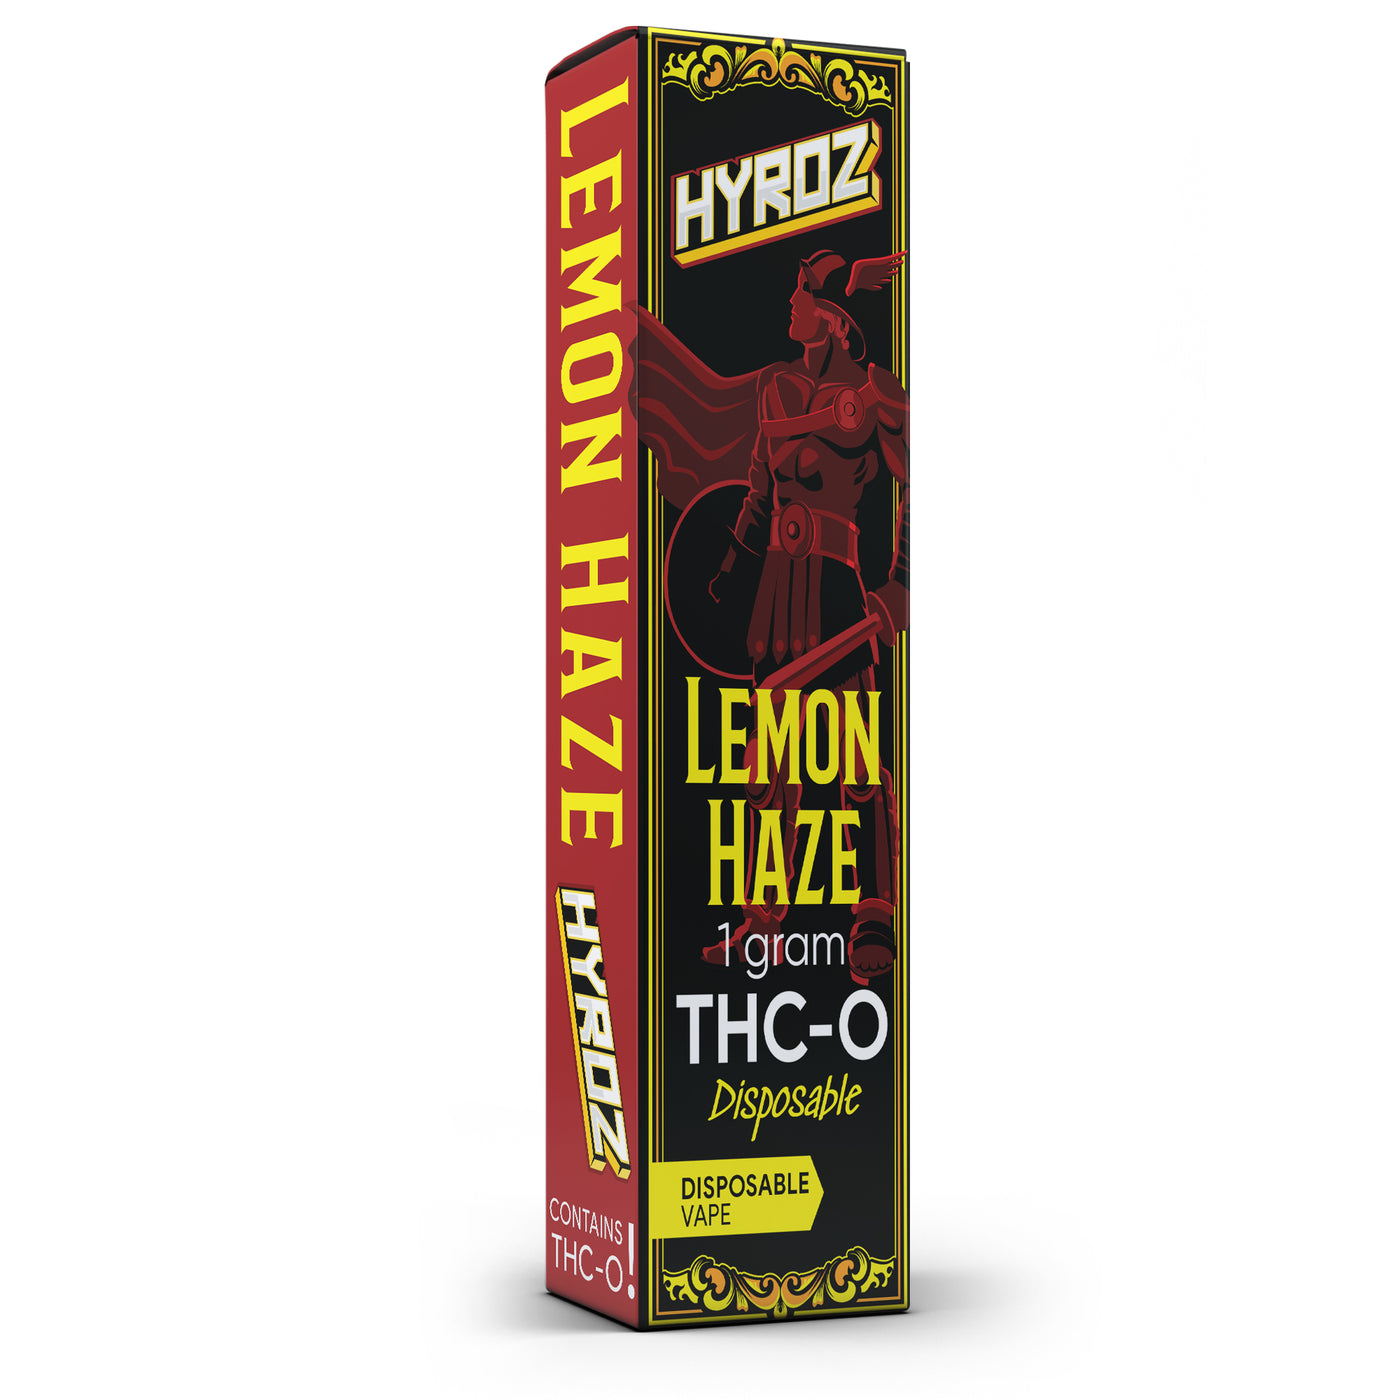 THCO Disposable Vape Lemon Haze | Hyroz | Premium Hemp-Derived D8, CBG, CBN, HHC, And THCO Products